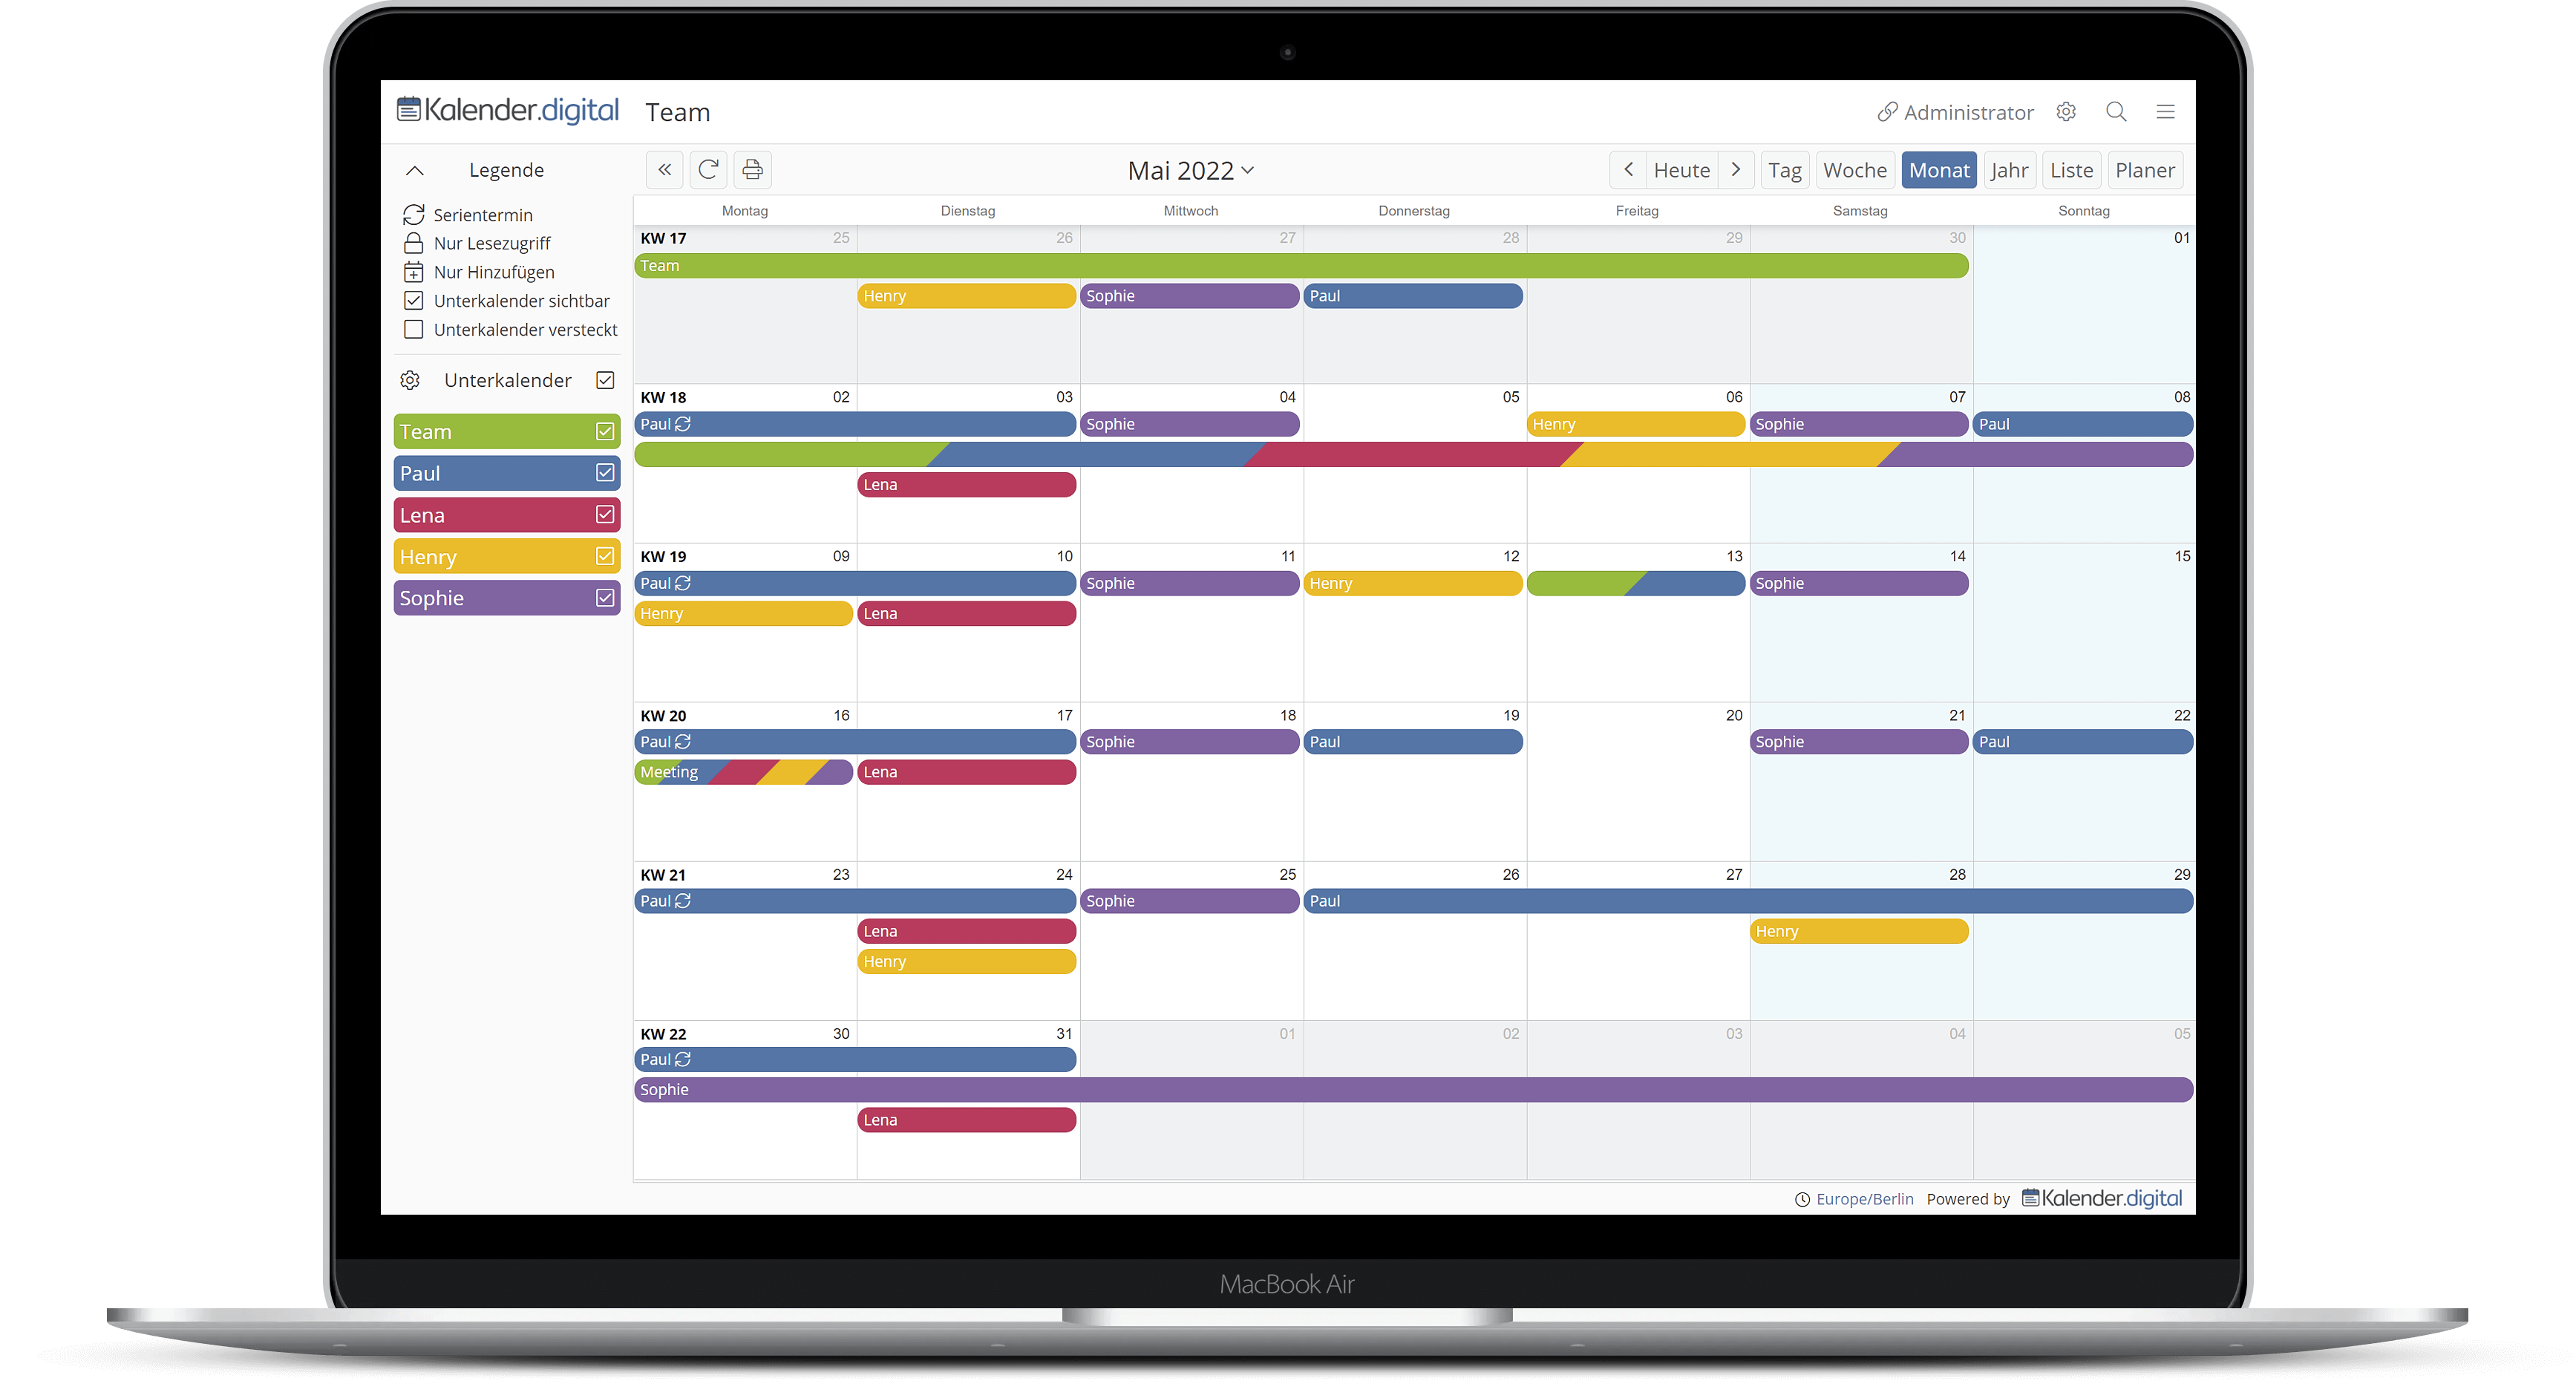 Online Kalender Teams und - Kalender.digital